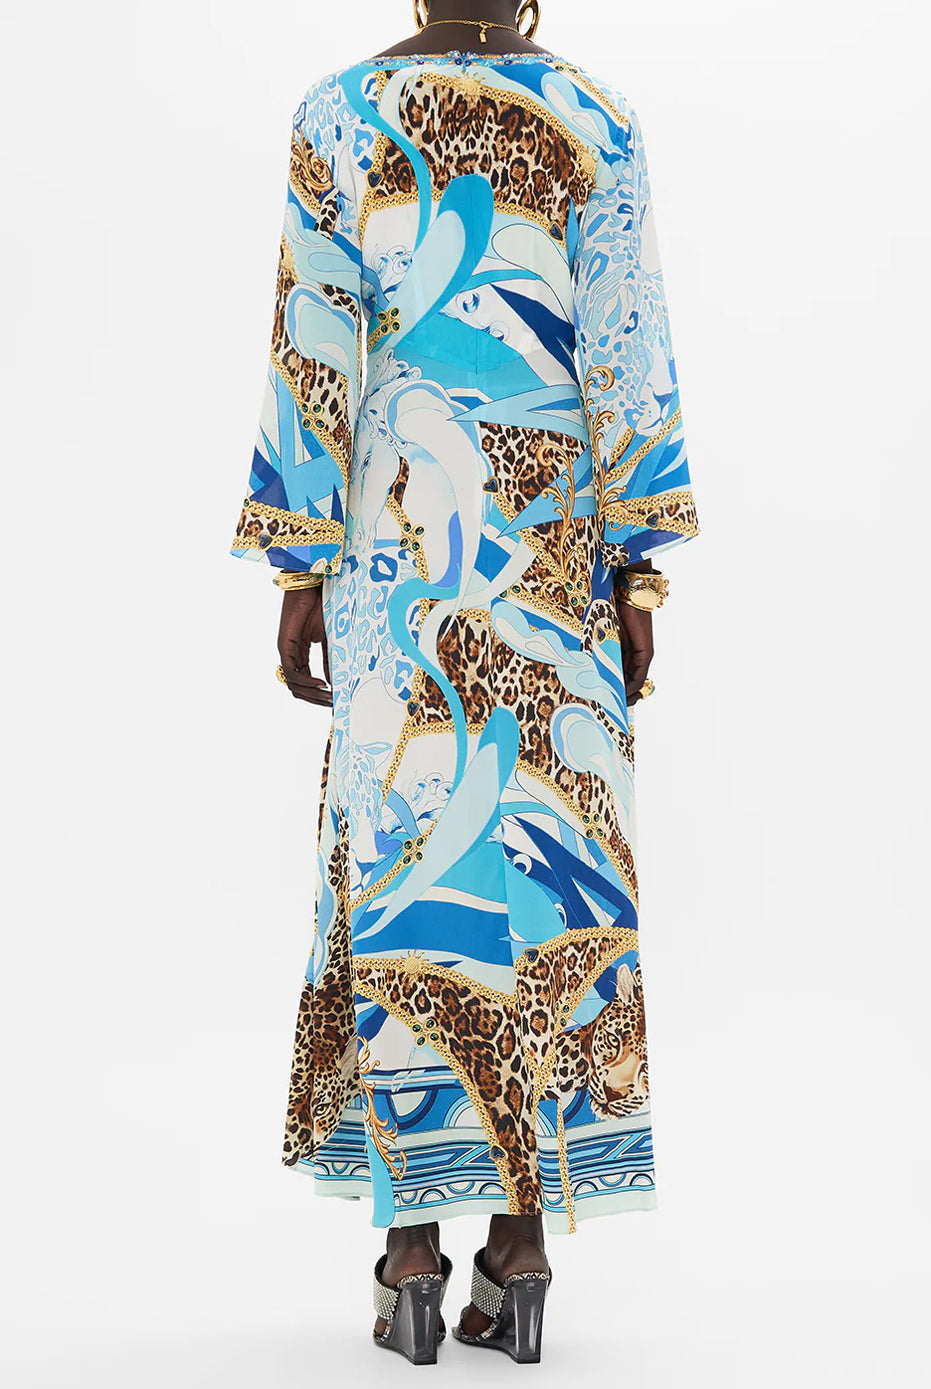 CAMILLA - Hardware Bias Dress Sky Cheetah - Magpie Style